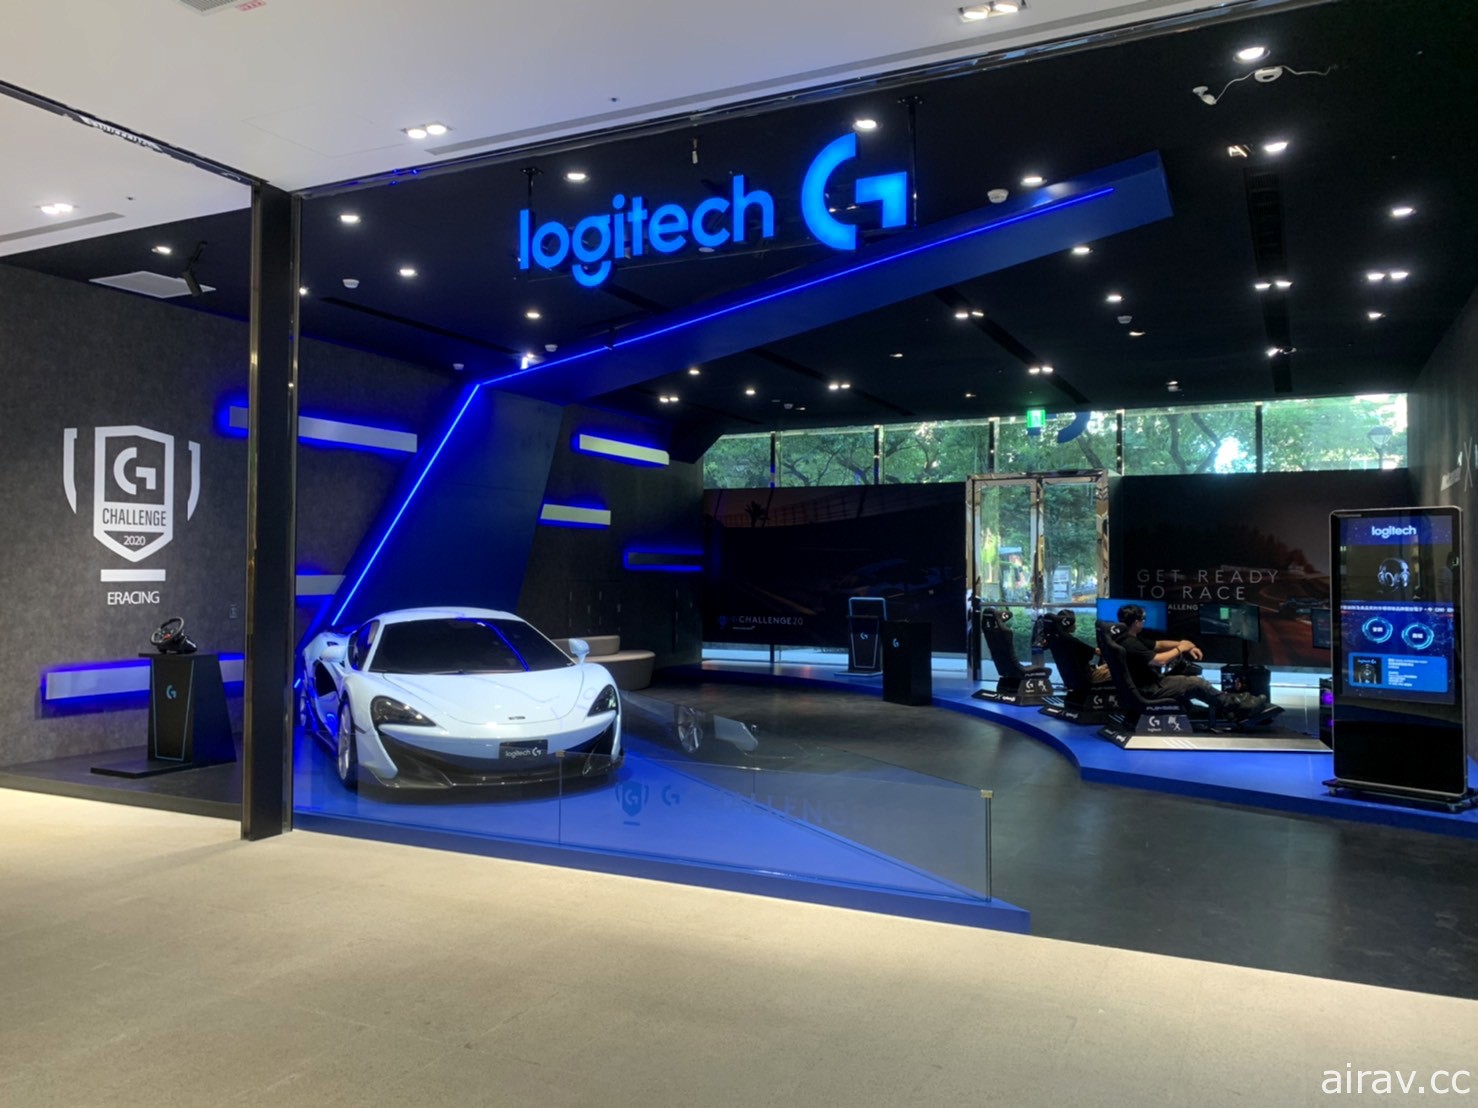 Logitech G 全新赛车驾驶套装 G923 十月在台开卖 将支援 PS5 主机